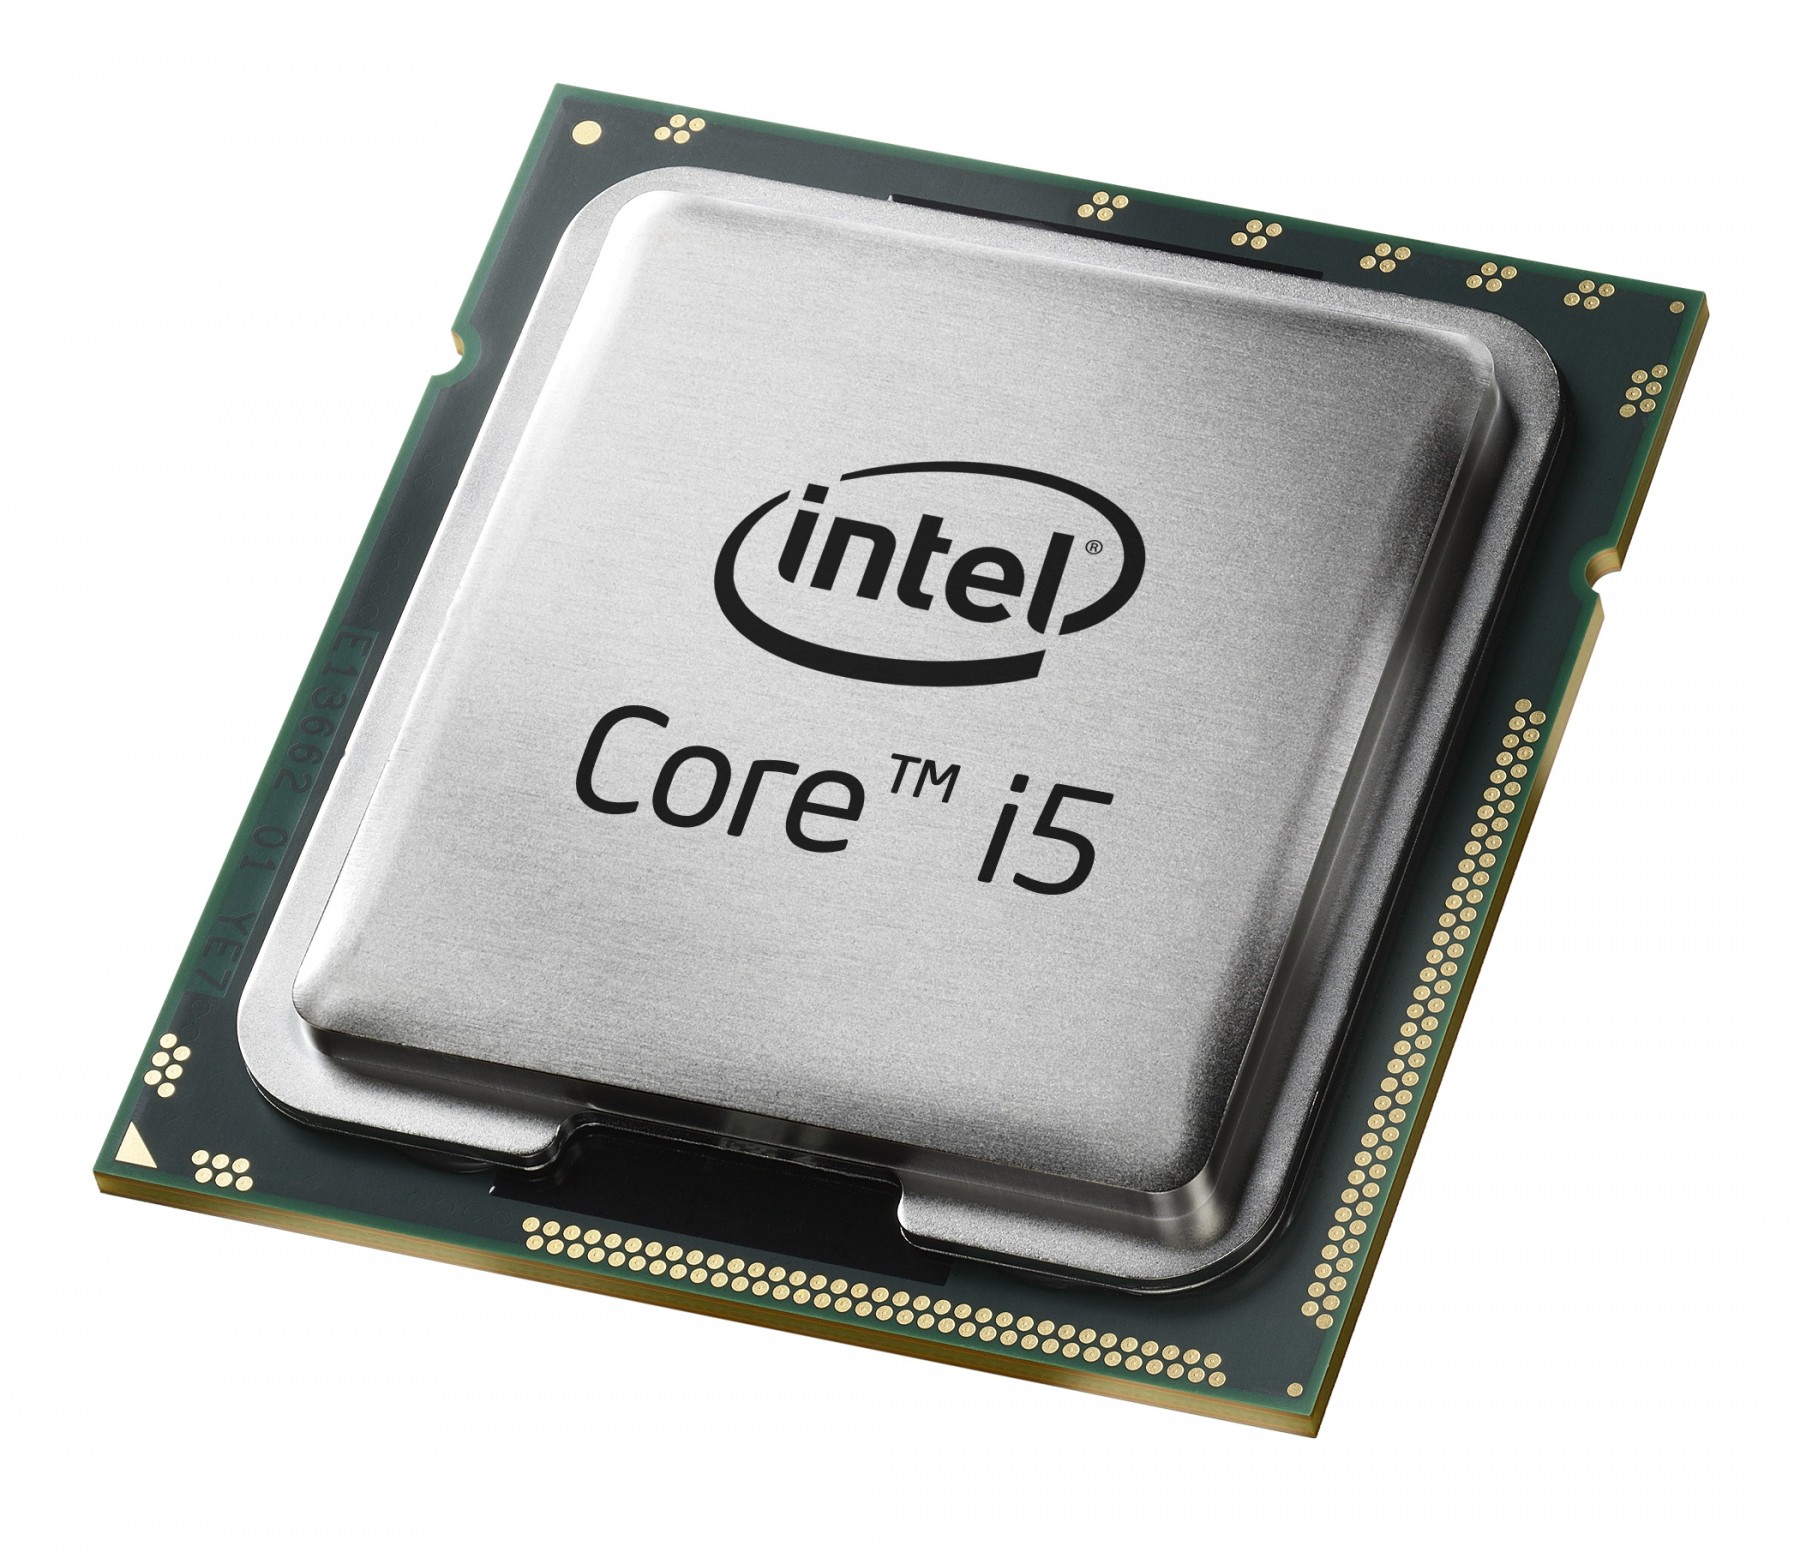 500030171-Intel Core i5-3317U SR0N8 1.7Ghz 5GT/s BGA 1023 Processor-image